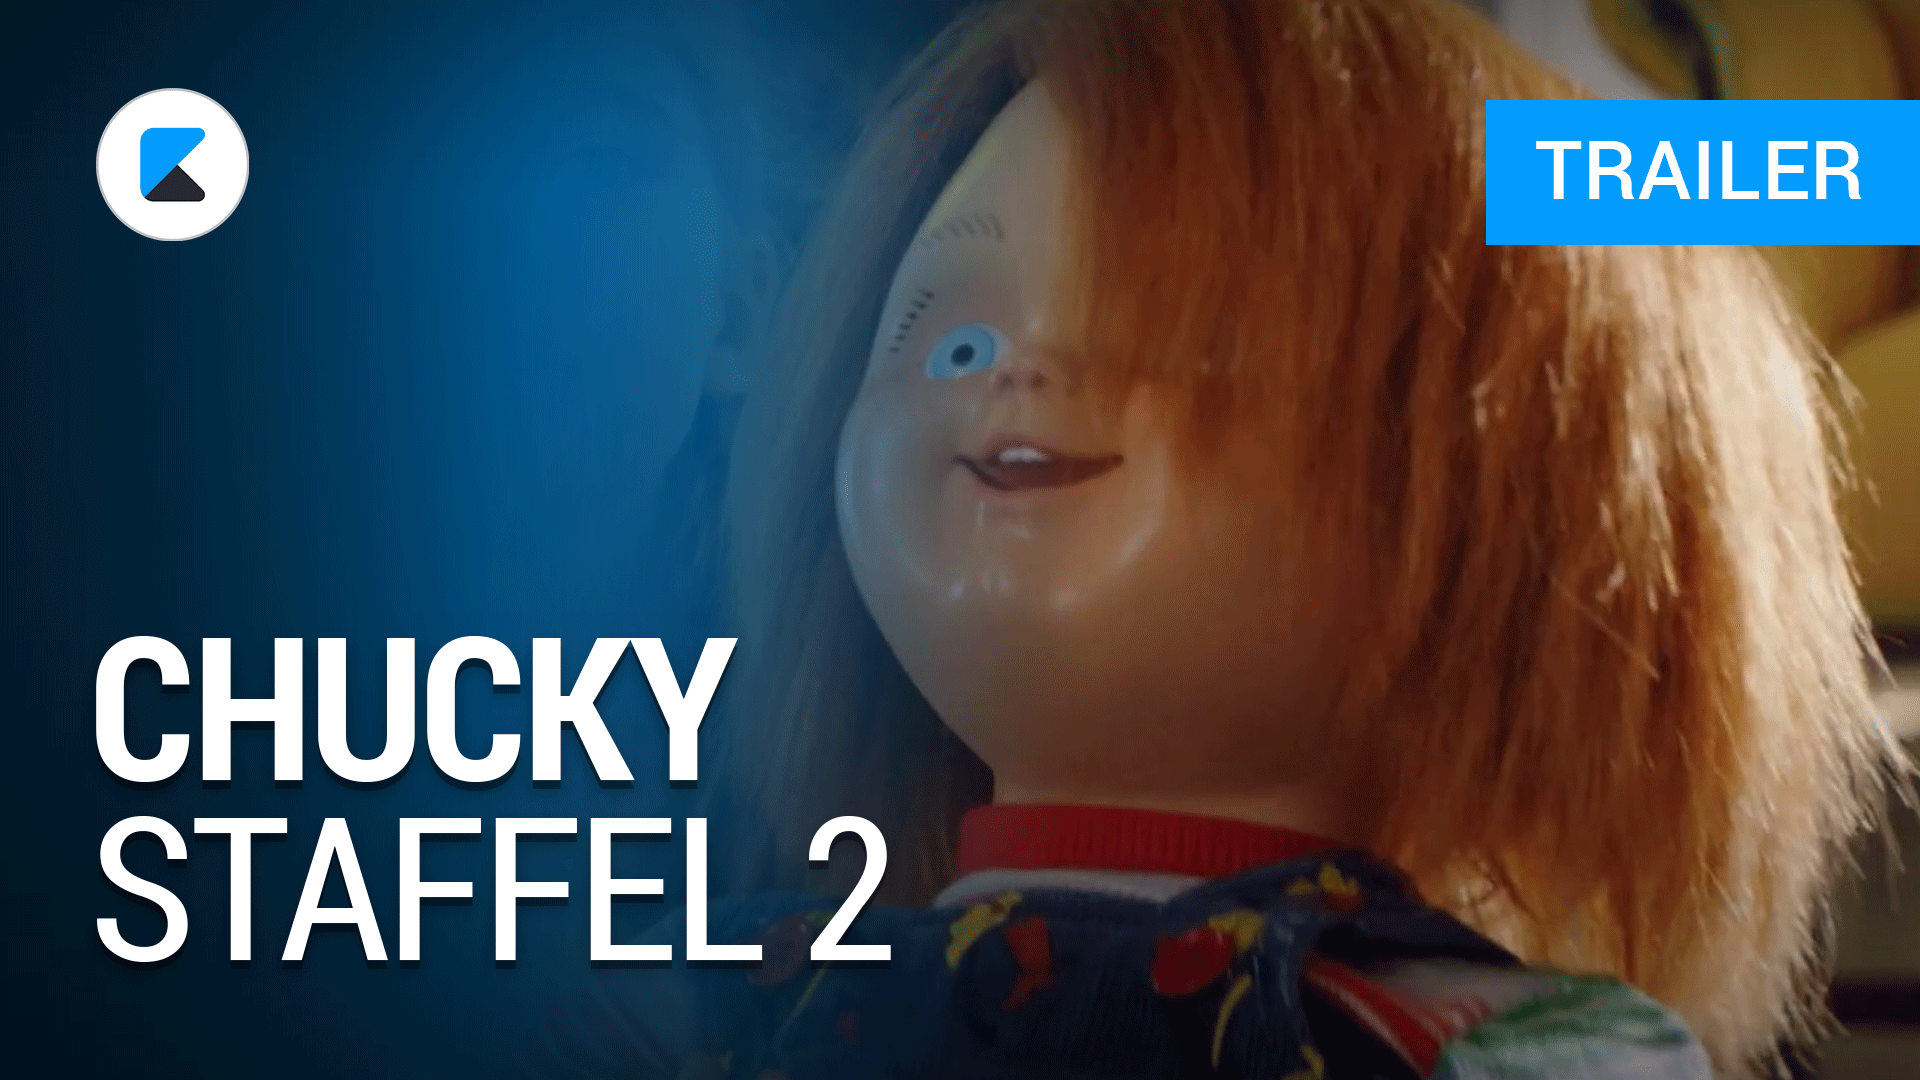 Chucky Staffel 2 Trailer